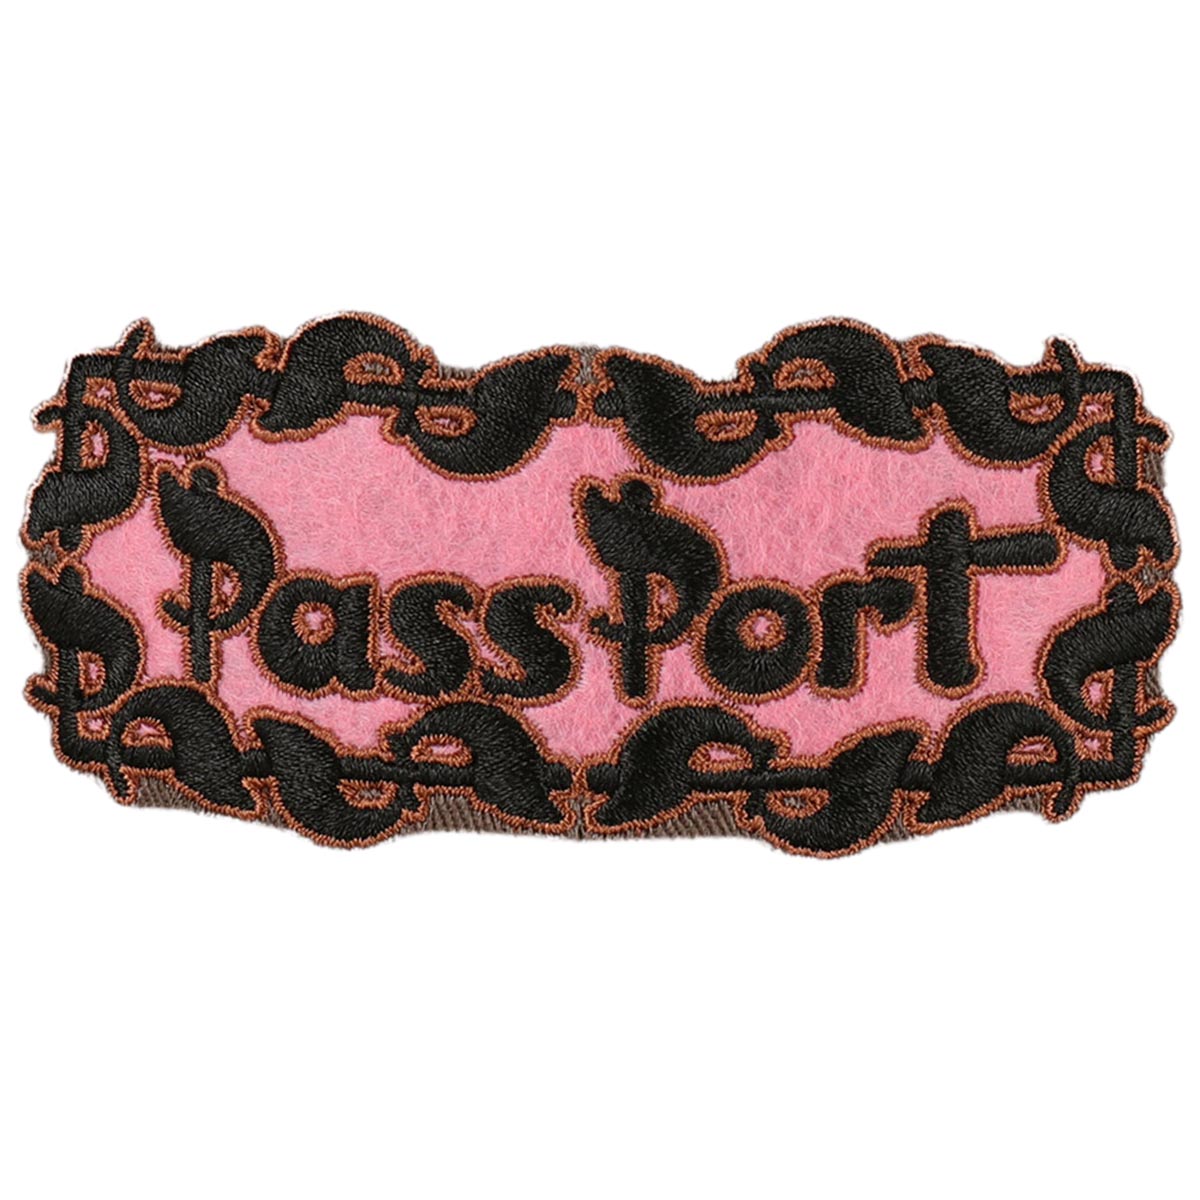 Passport Pattoned Casual Hat - Bark image 3